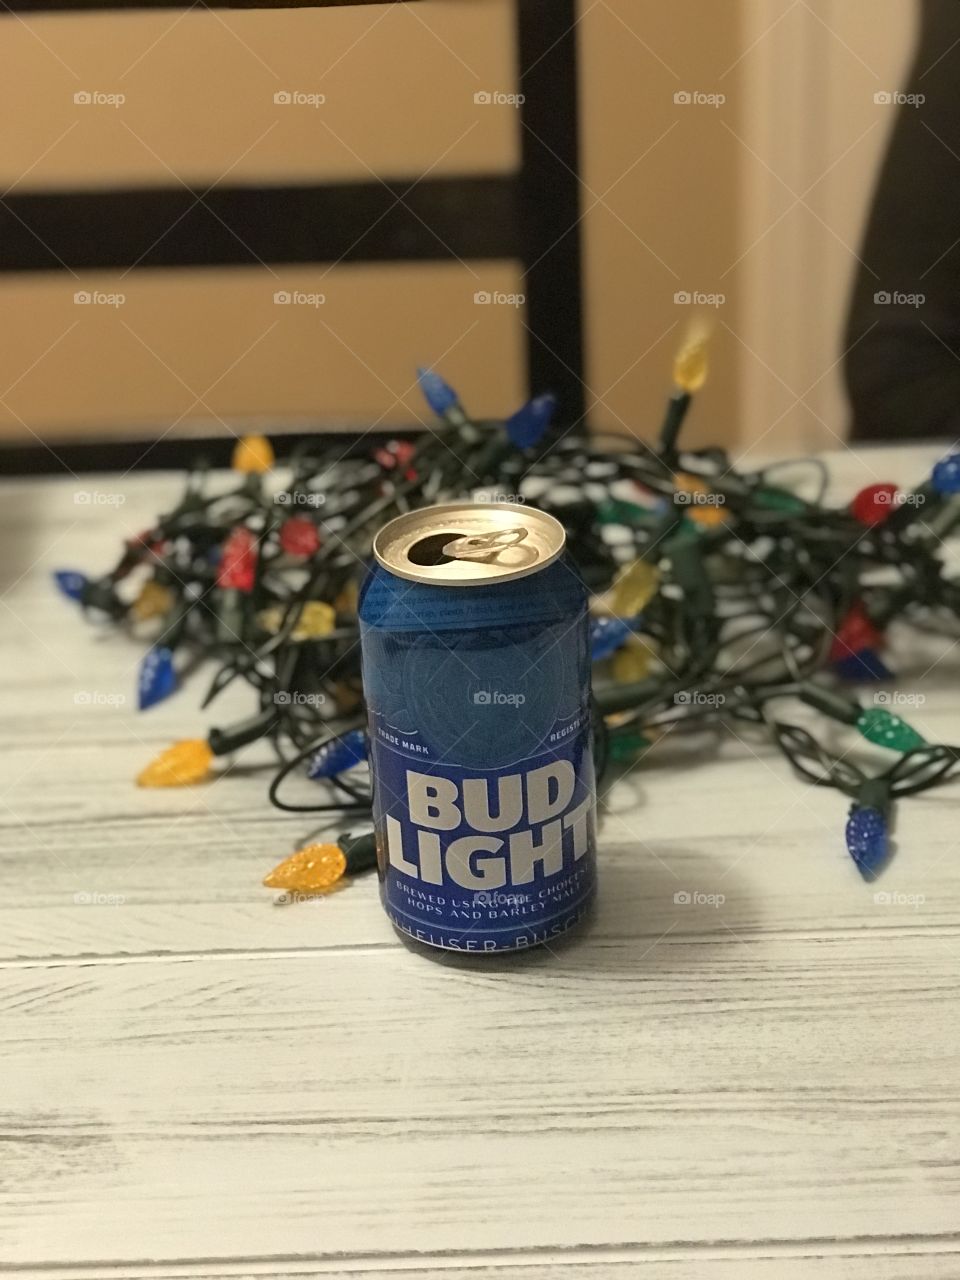 Bud light celebrations
